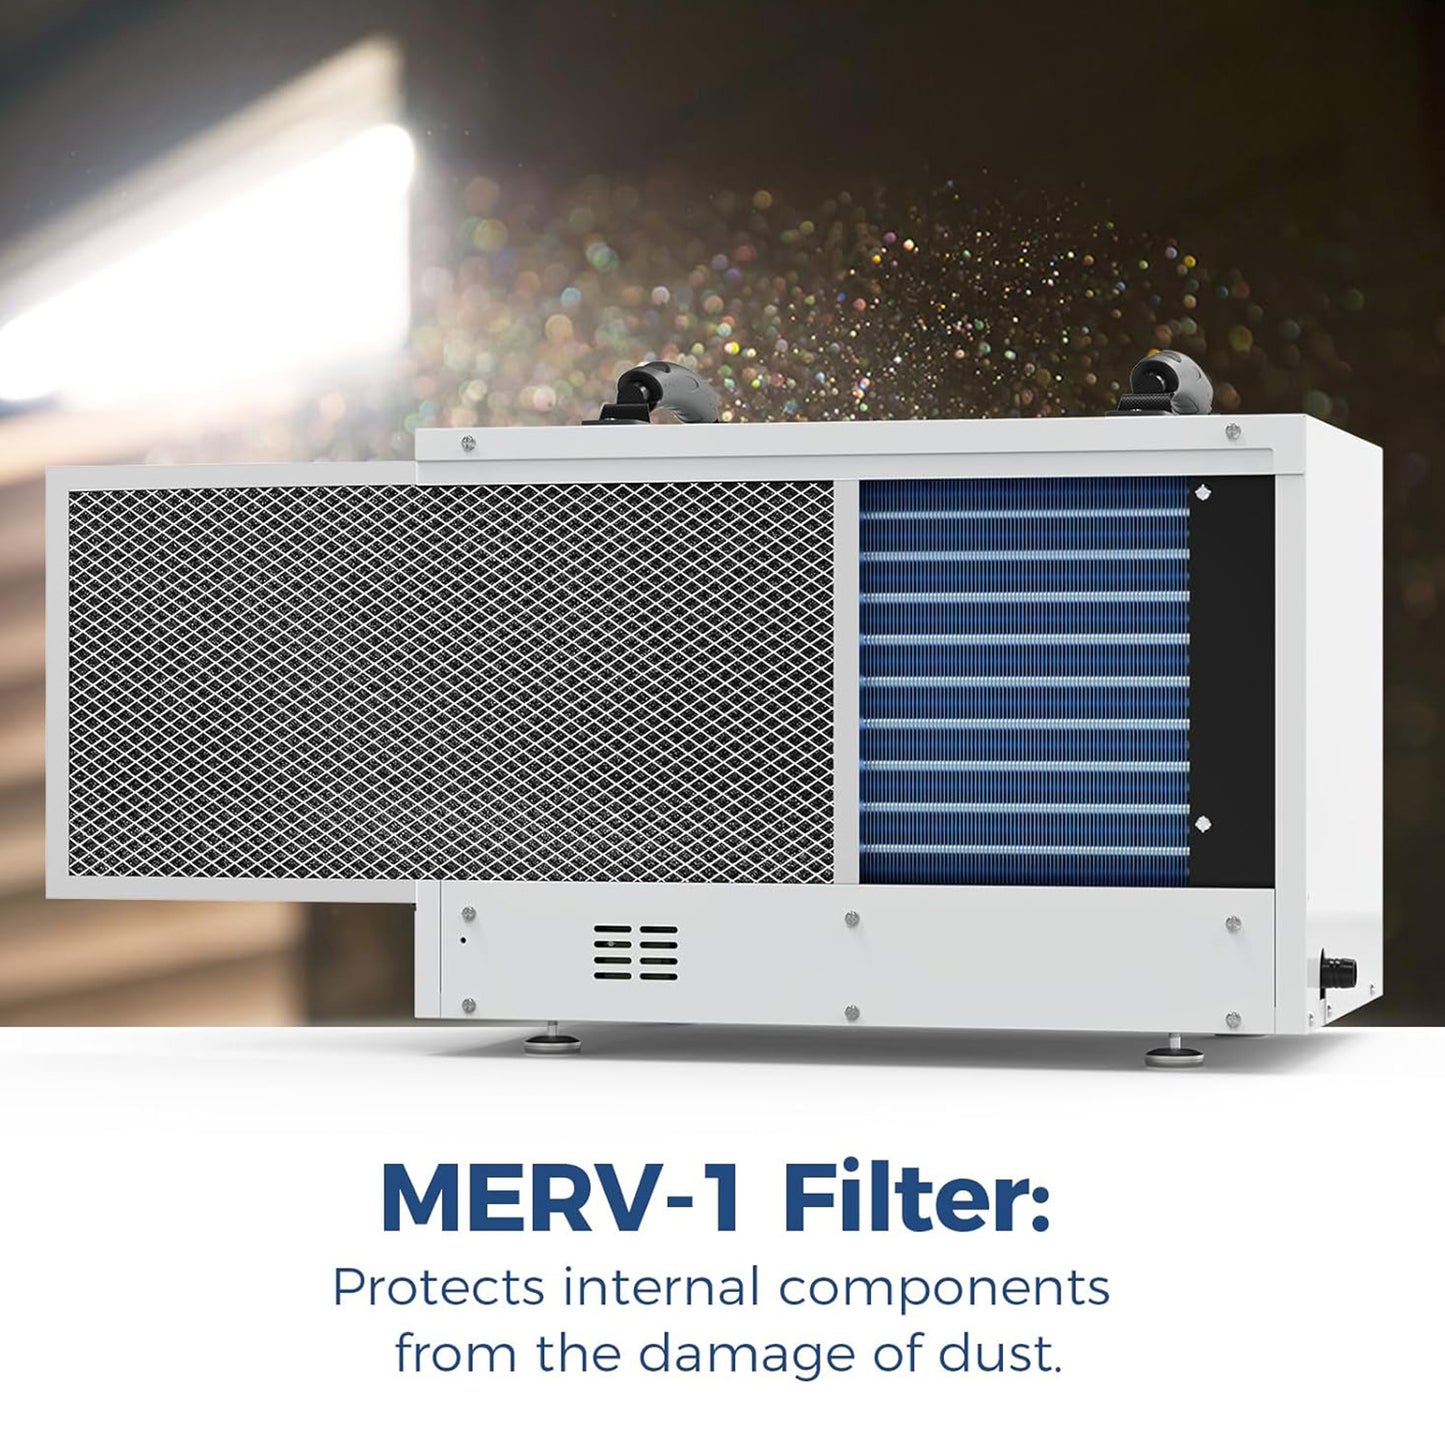 MERV-1 filter